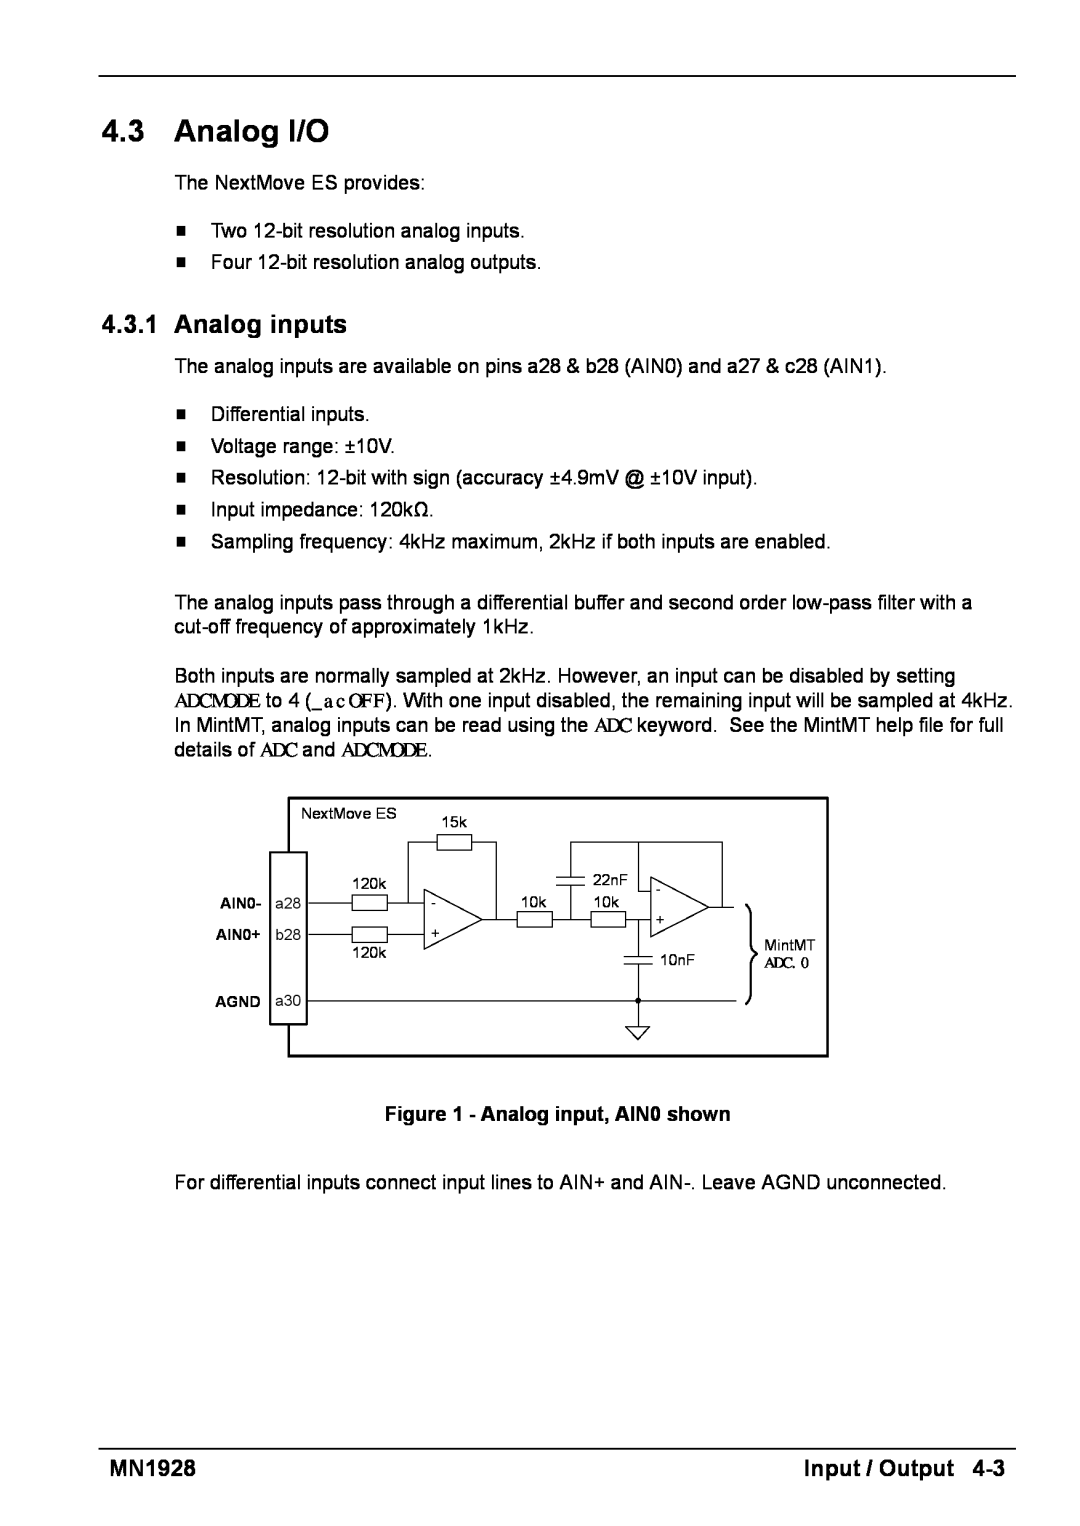 Baldor MN1928 installation manual Analog I/O, 4.3.1Analog inputs, Input / Output, Analog input, AIN0 shown 